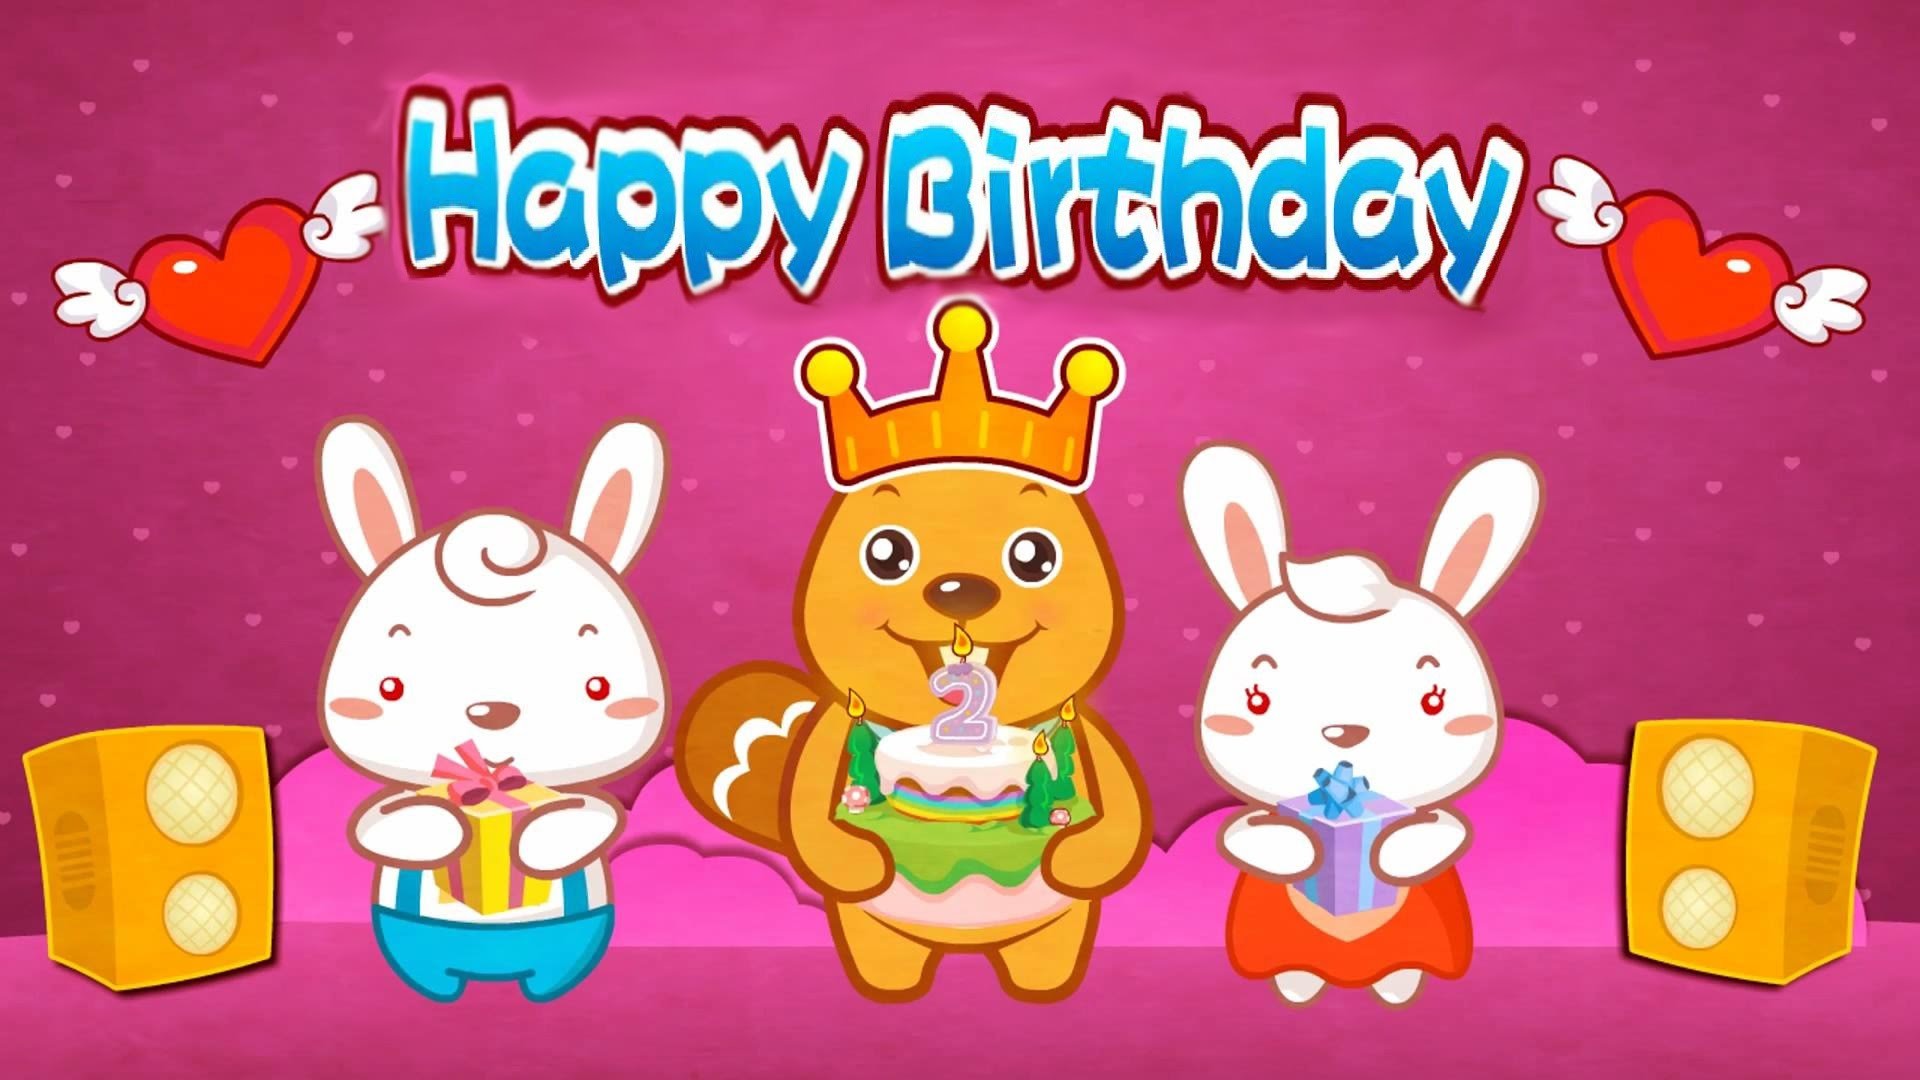 Happy Birthday Song - 生日 快乐 韩文 - HD Wallpaper 